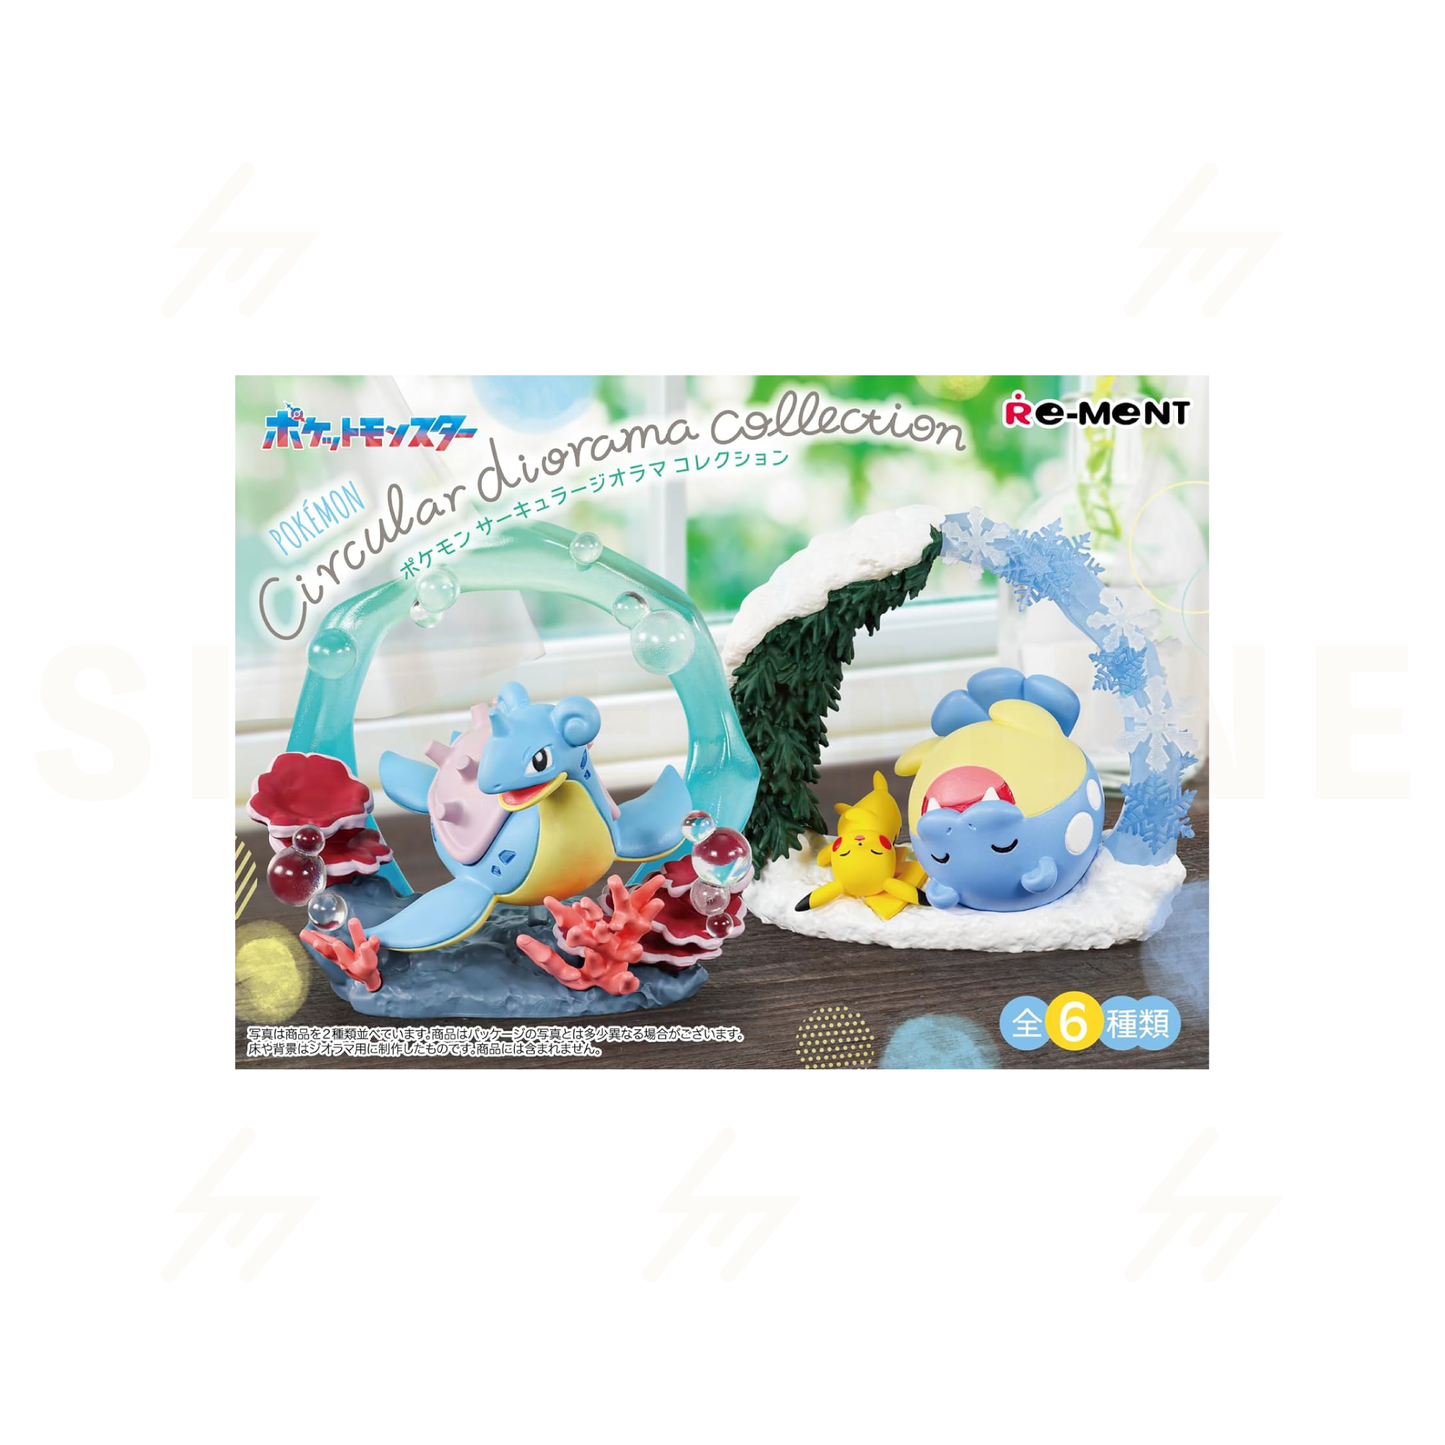 PRE-ORDER: Re-Ment - Blind Box - Pokemon - Circular Diorama Collection